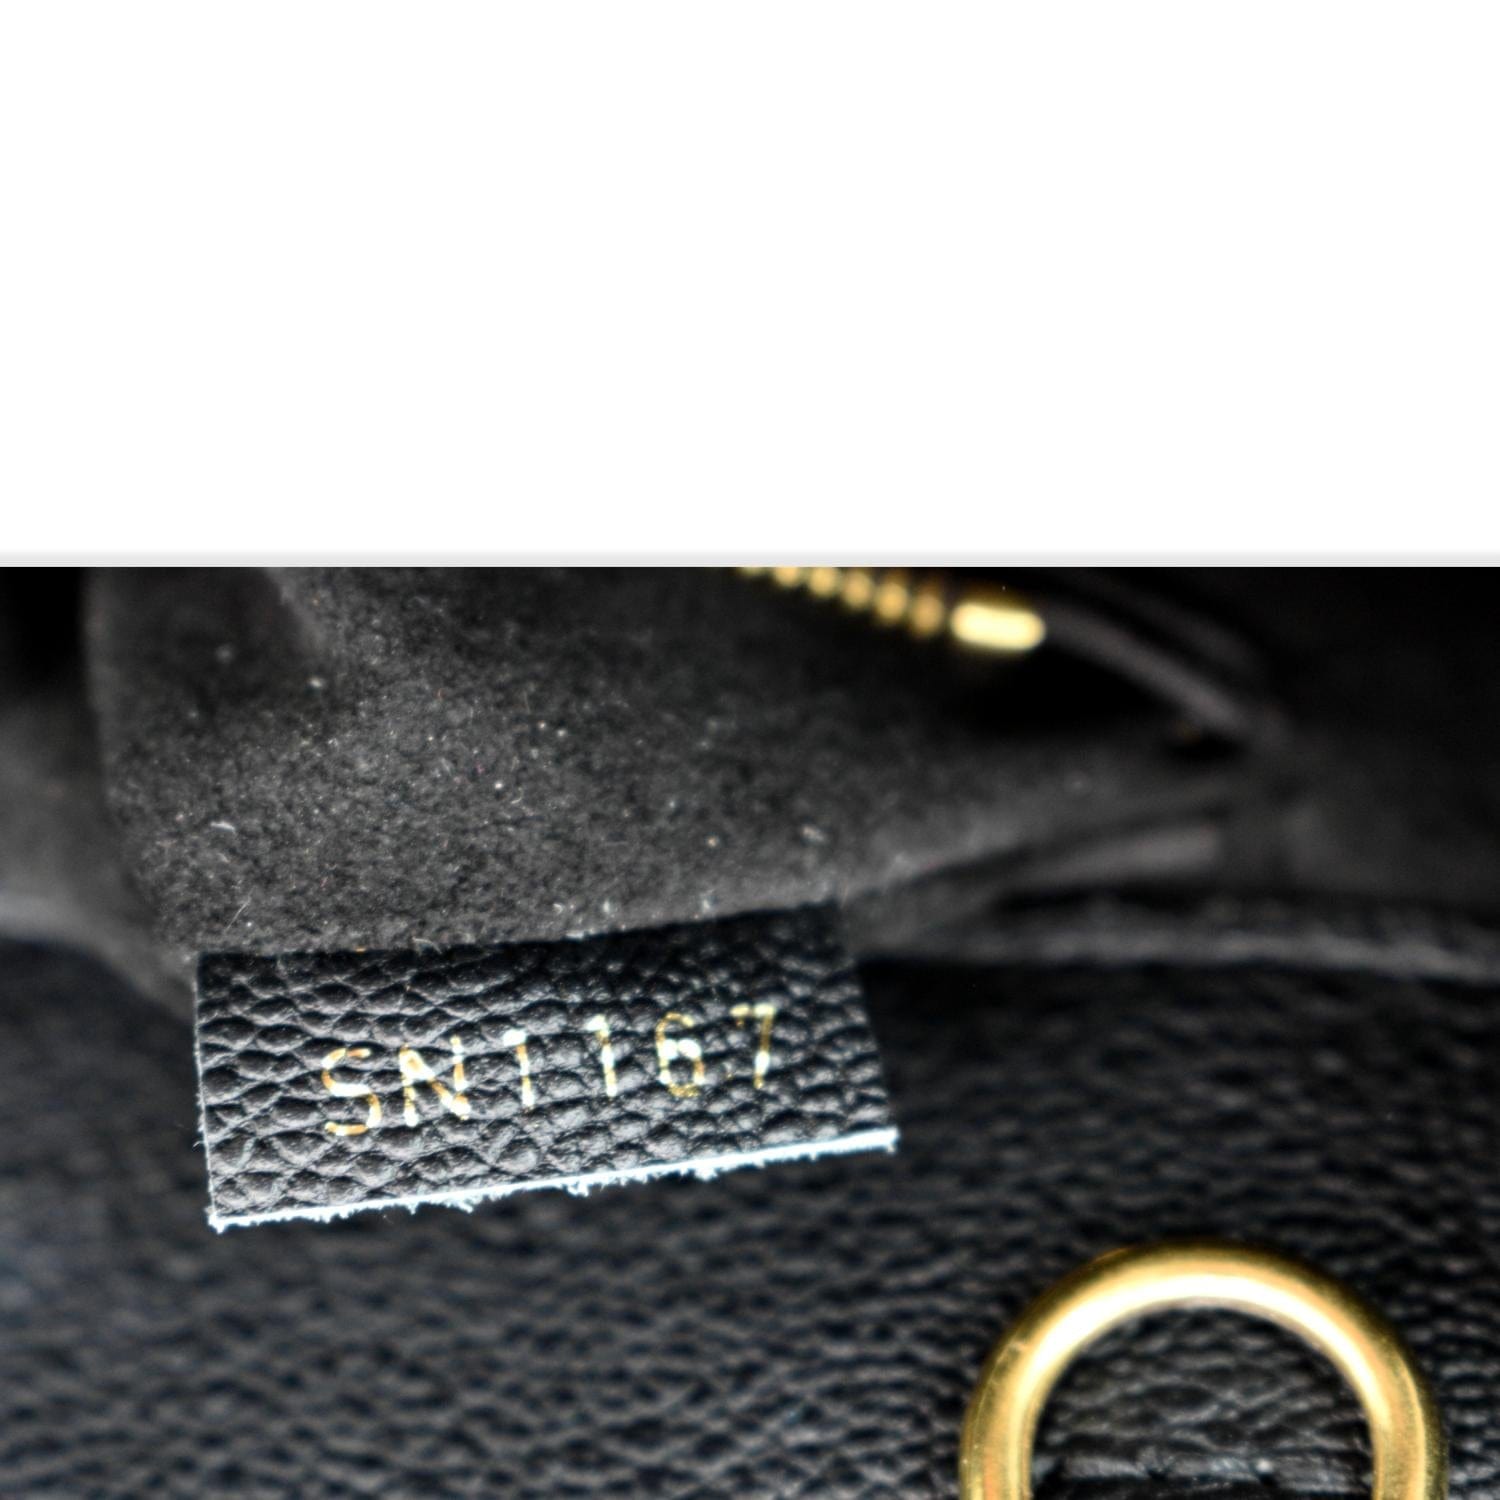 Louis Vuitton Monogram Florine Bag